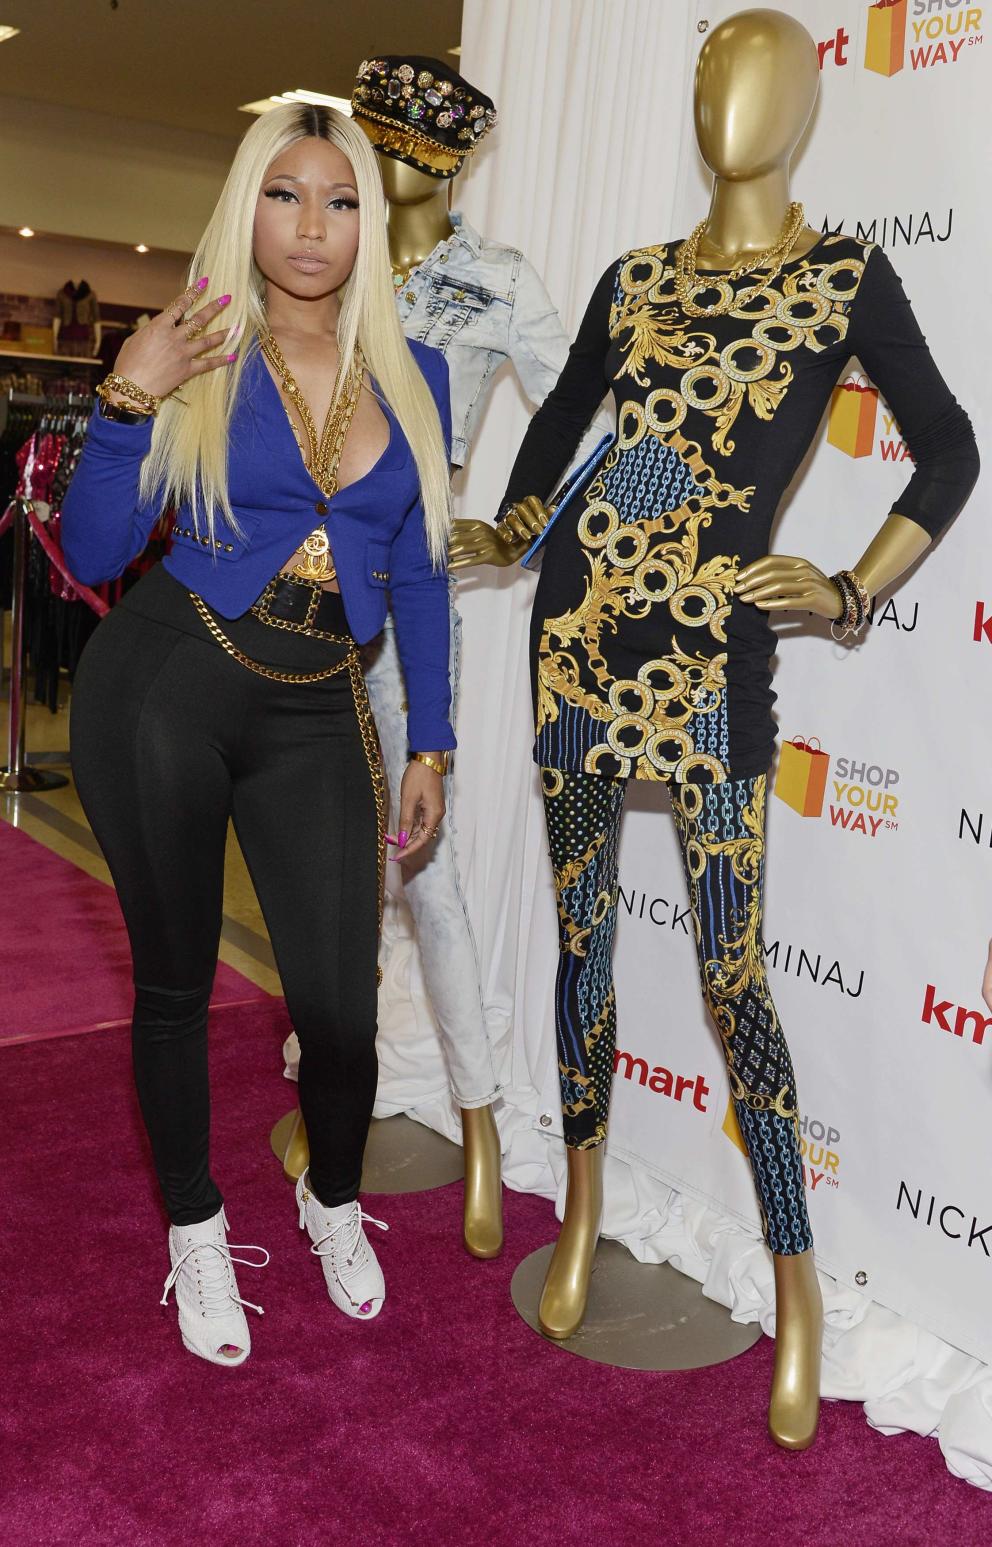 Nicki Minaj launches fashion line at Kmart in Los Angeles